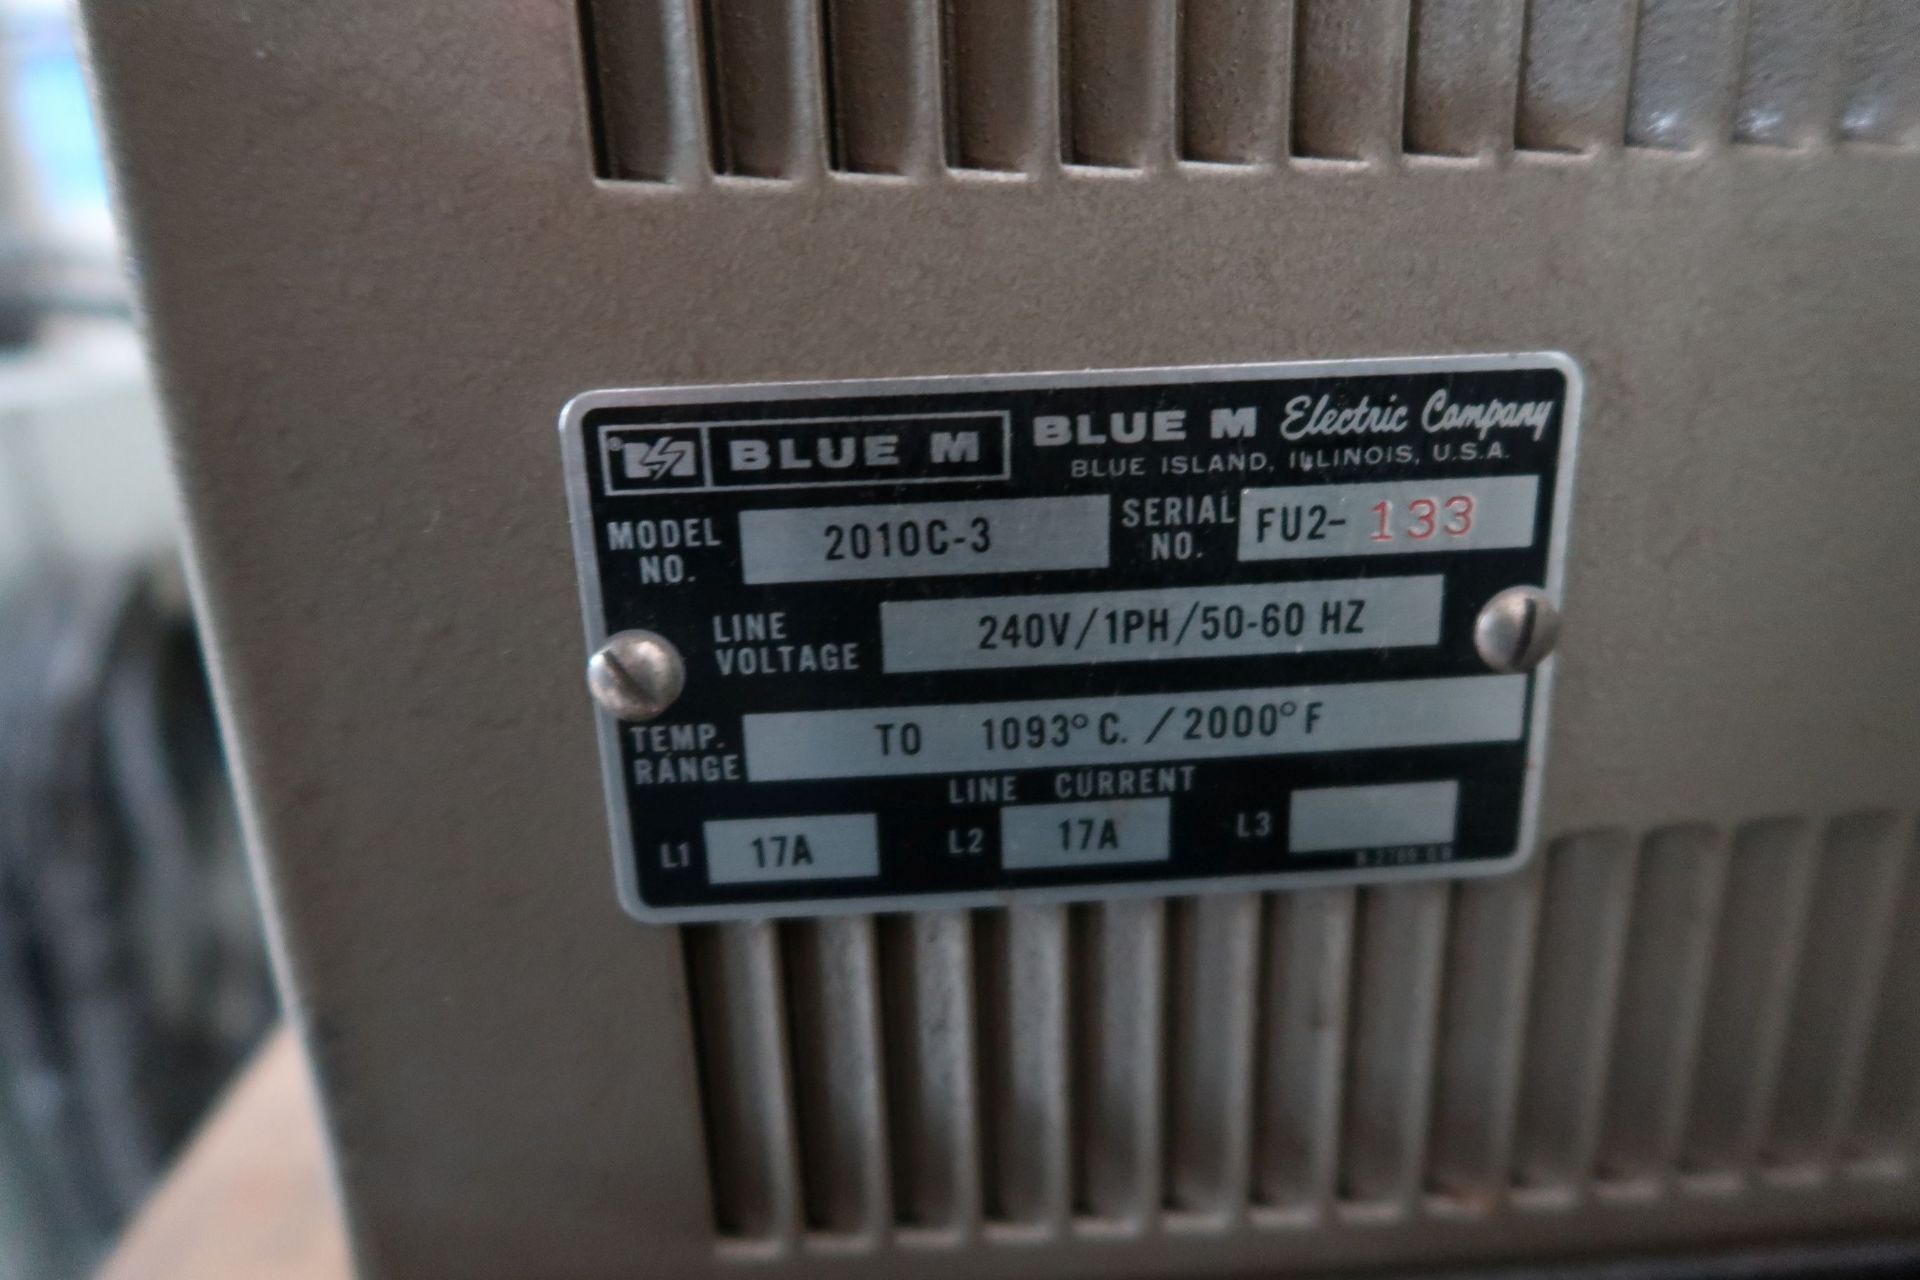 BLUE M MODEL 2010C-3 OVEN; S/N F42-133, MAX TEMP 2,000 DEGREE, 5" X 5" X 15" DEEP CHAMBER - Image 4 of 4